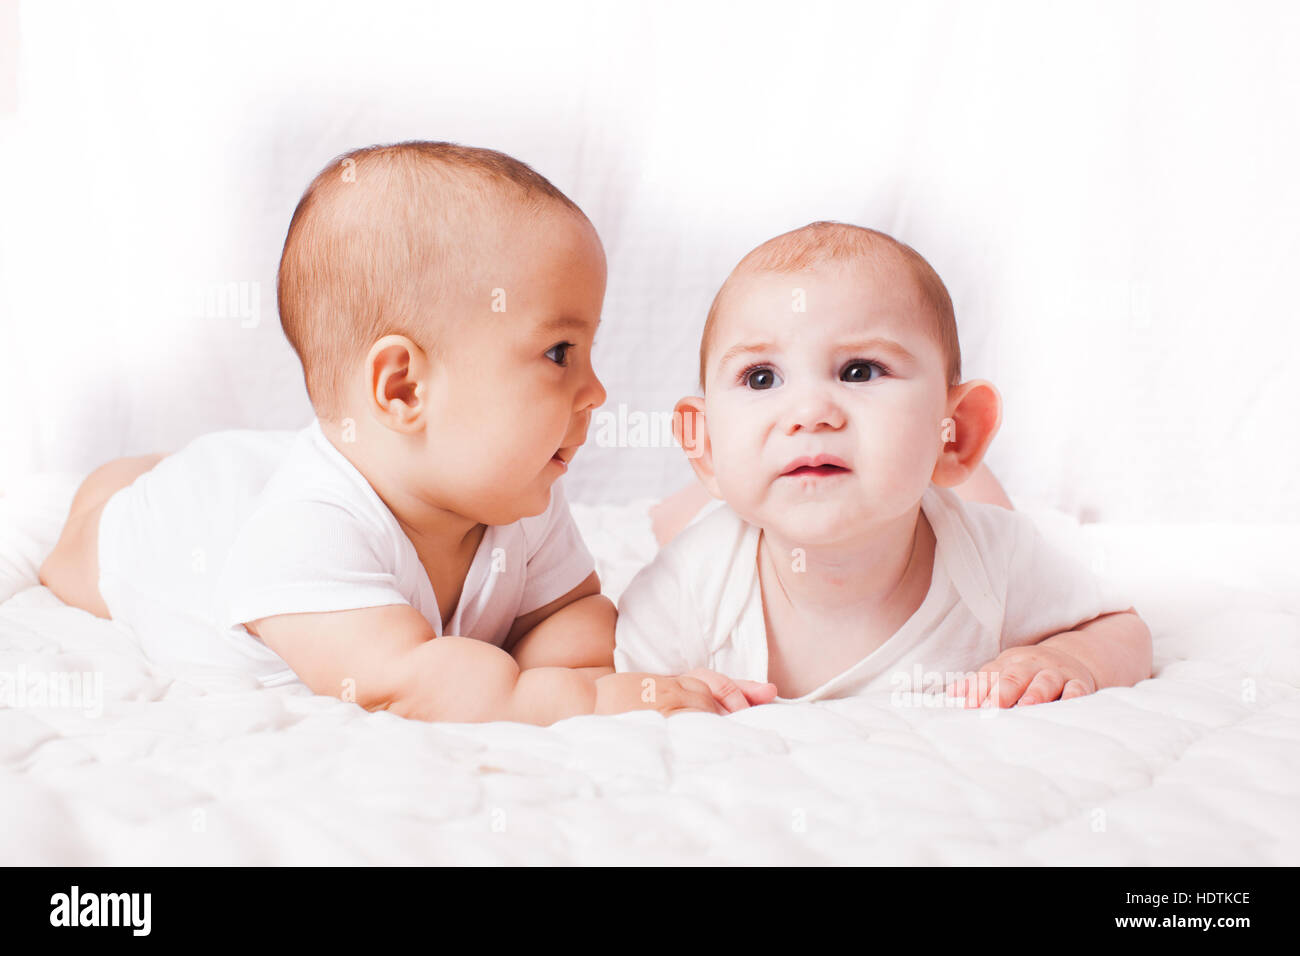 Babies talking, humor Stock Photo